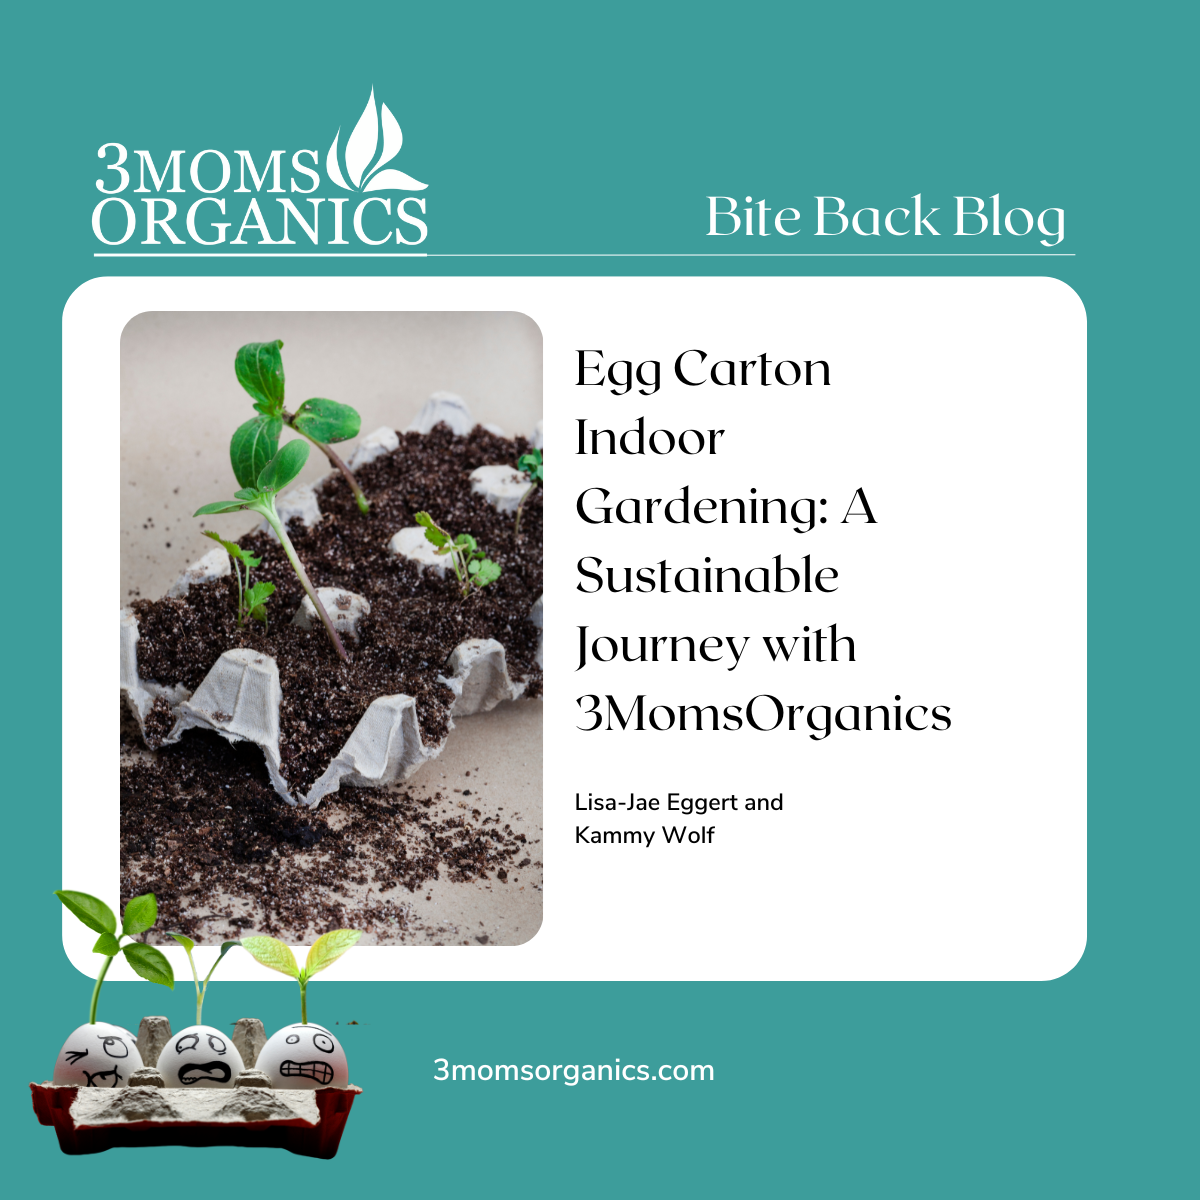 Egg Carton Indoor Gardening: A Sustainable Journey with 3MomsOrganics